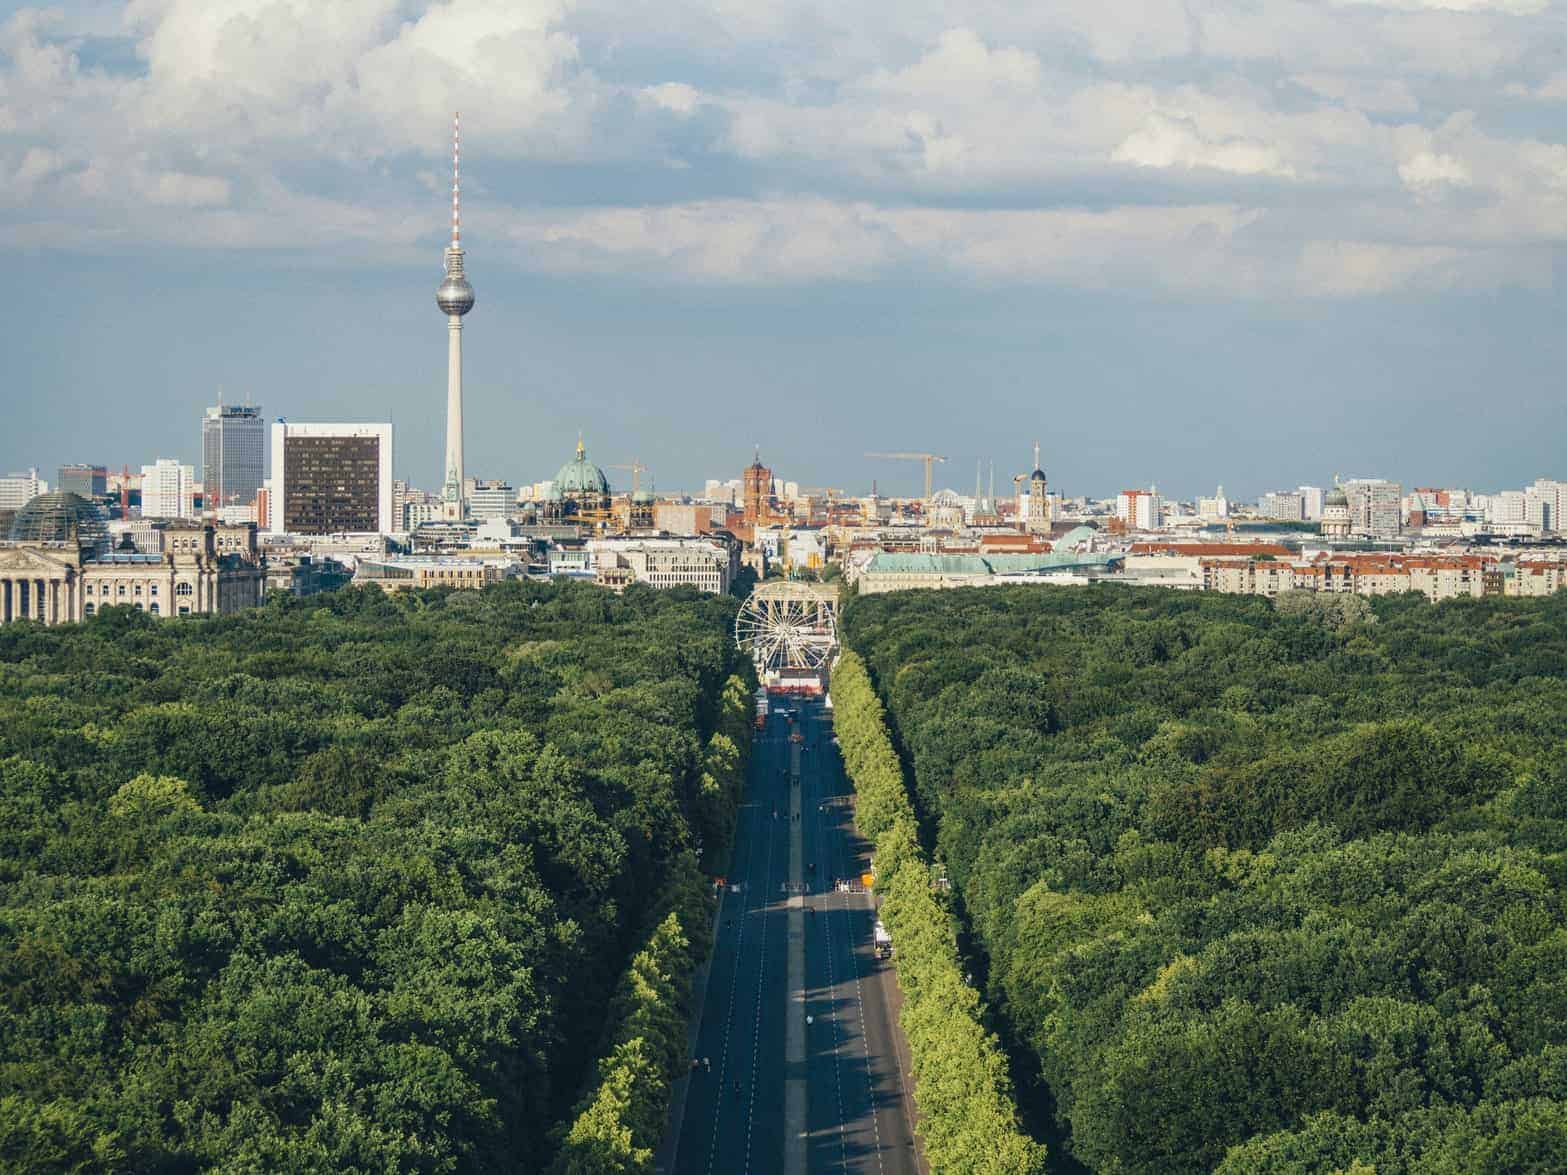 Immobilieninvestor in Berlin - Private Equity Investor kauft Büroimmobilien